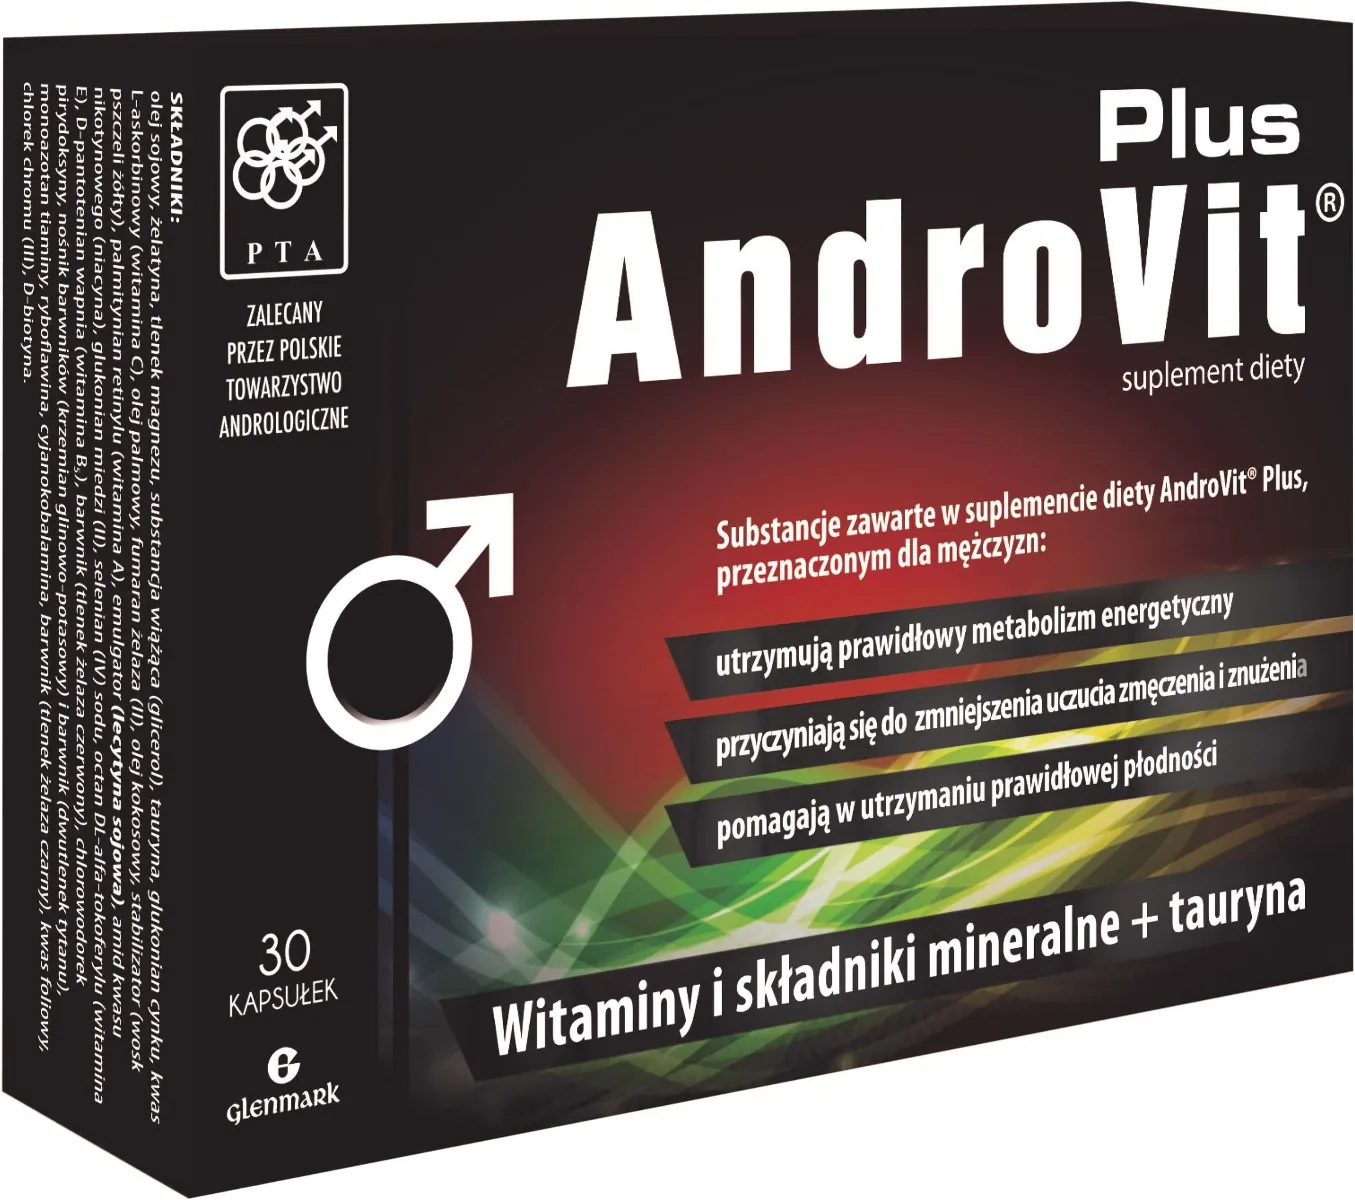 AndroVit Plus, suplement diety, 30 kapsułek 